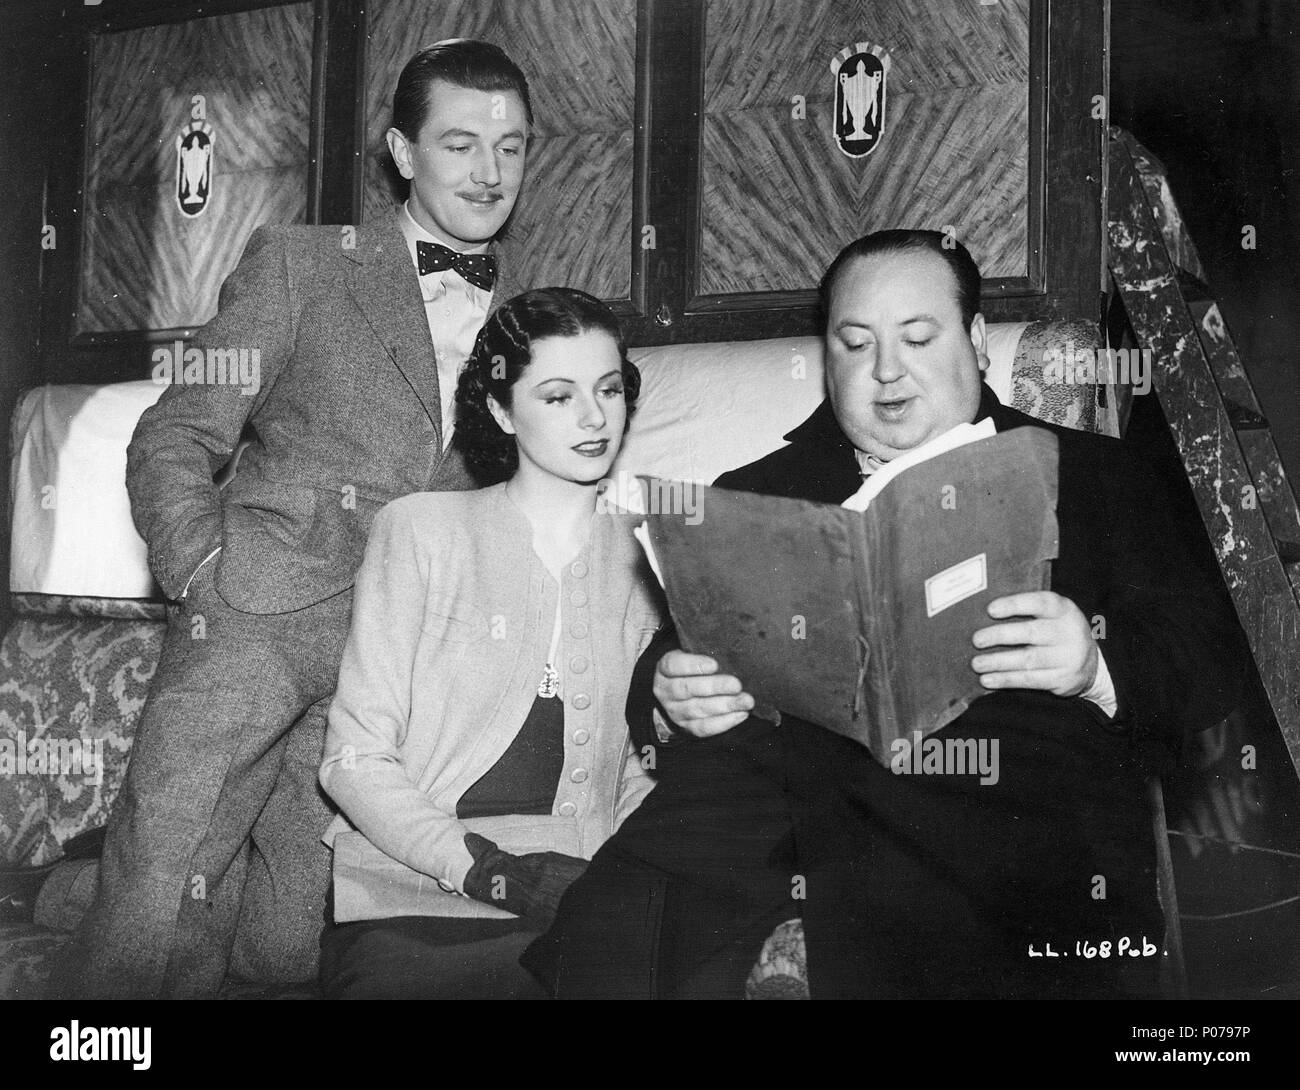 Original Film Title: THE LADY VANISHES.  English Title: THE LADY VANISHES.  Film Director: ALFRED HITCHCOCK.  Year: 1938.  Stars: MICHAEL REDGRAVE; ALFRED HITCHCOCK; MARGARET LOCKWOOD. Credit: GAINSBOROUGH FILMS / Album Stock Photo